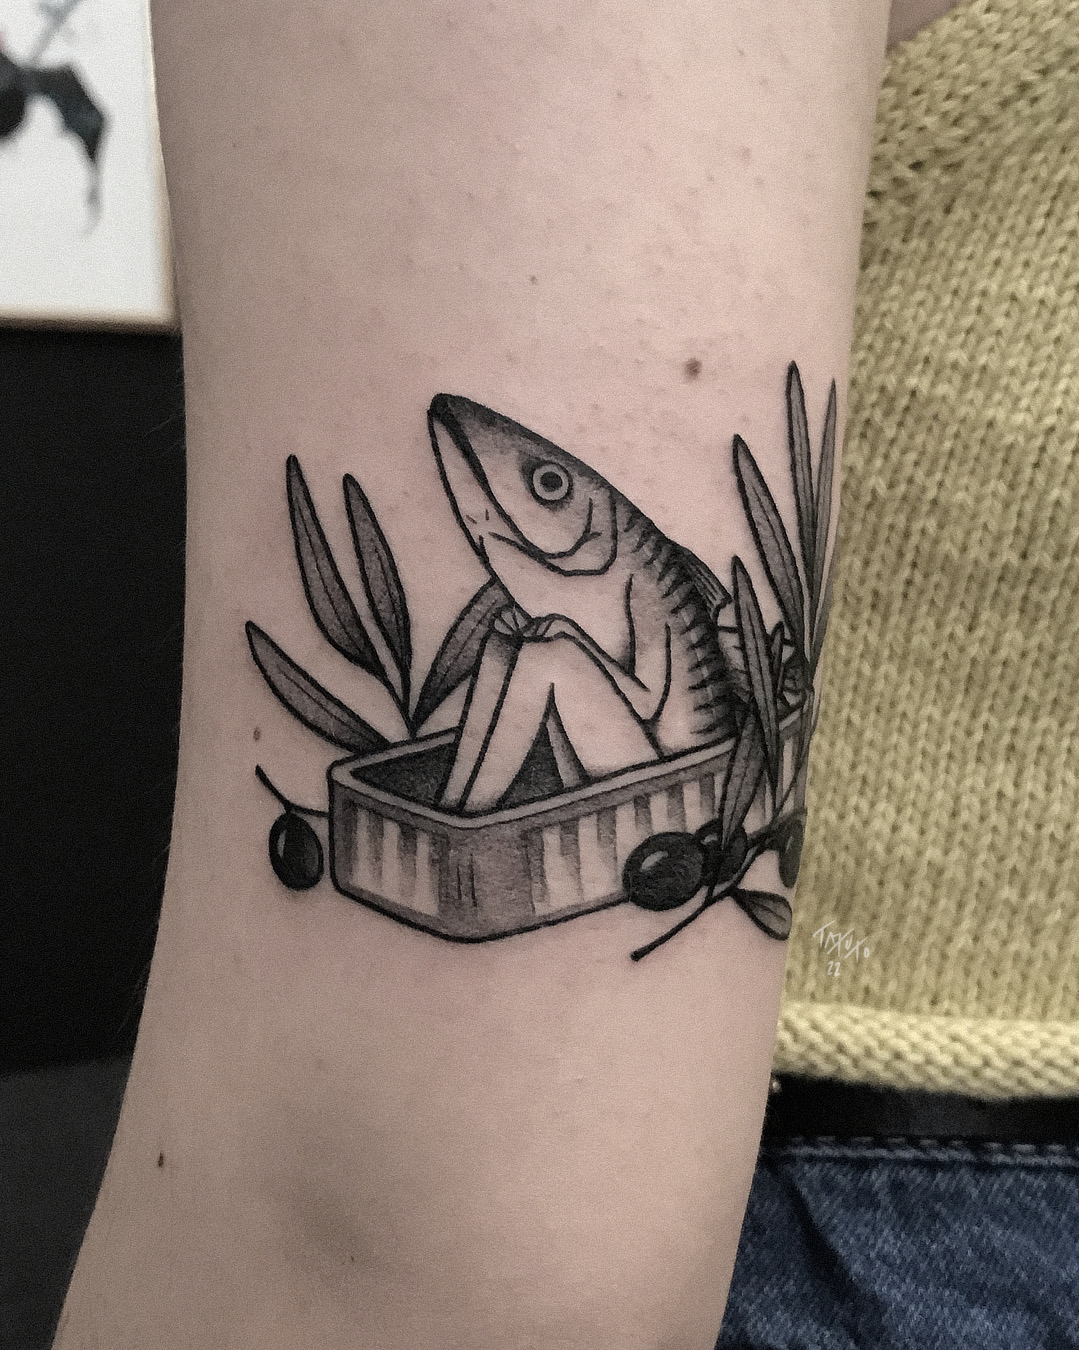 nico-tatuto-maquereau-sardine-boite-tatoueur-tattoo-placard-bordeaux-gironde-olive-olivier-branche-floral-2